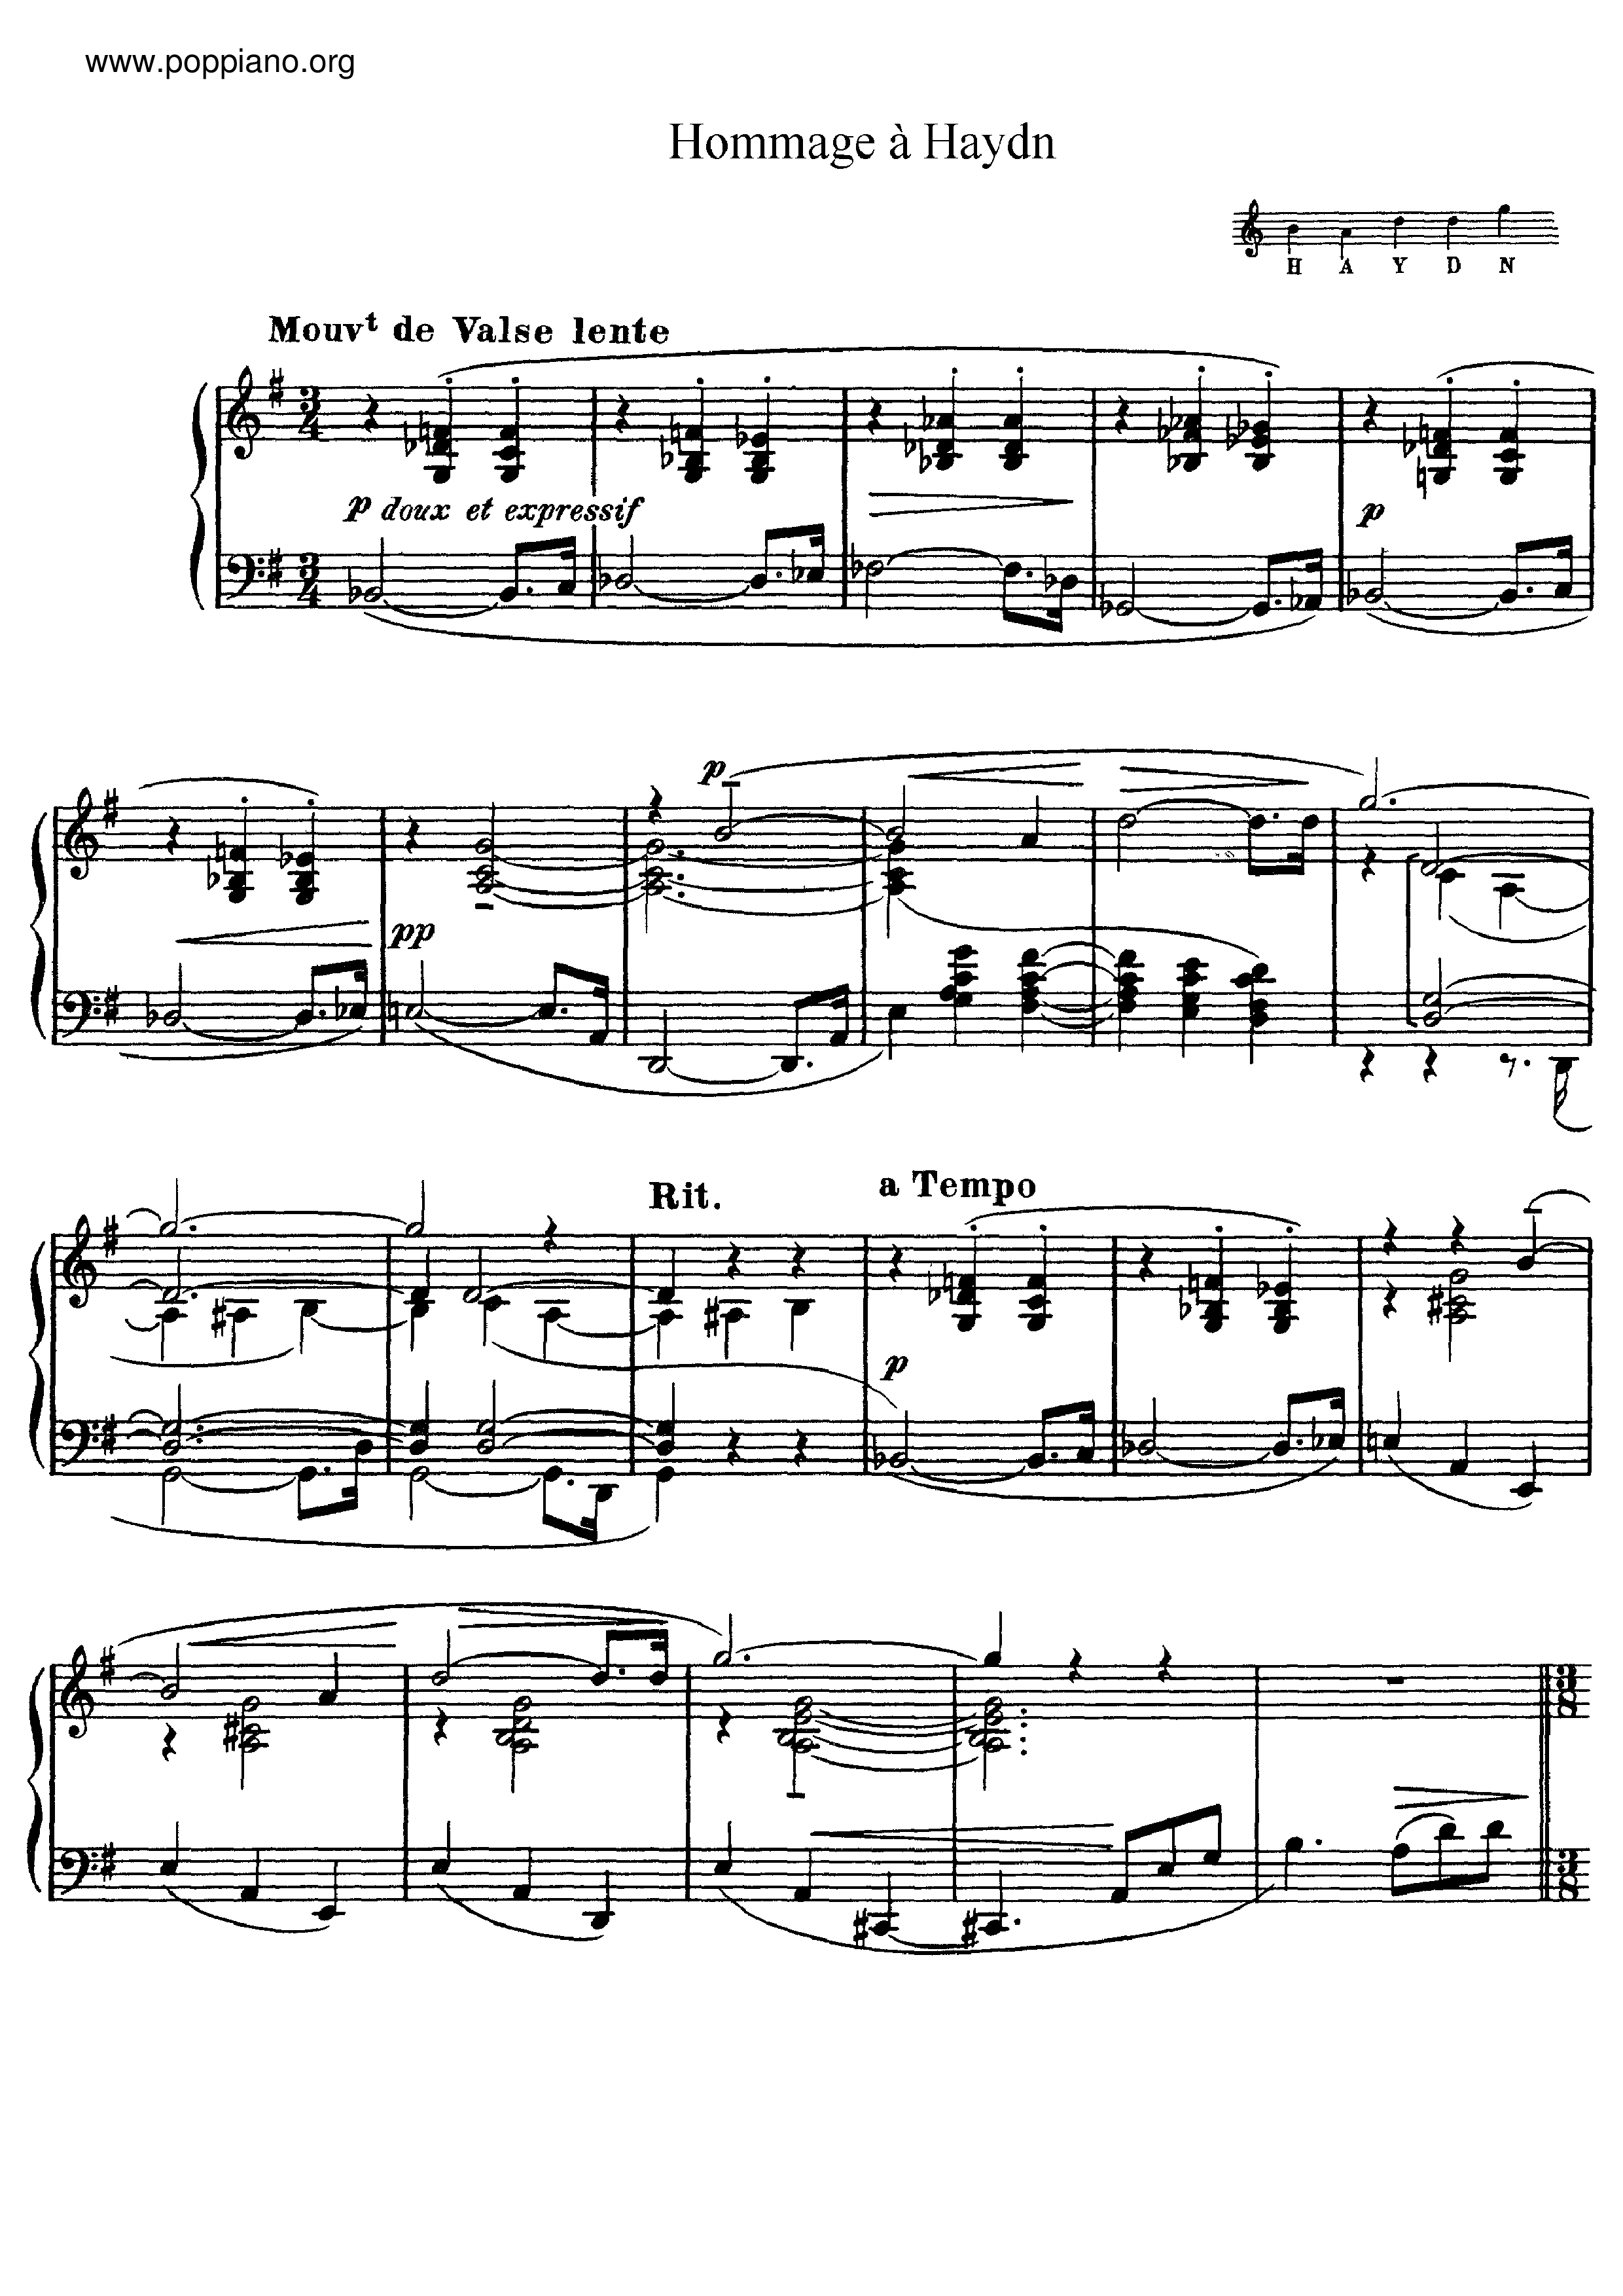 Hommage a Haydn, L. 115琴谱